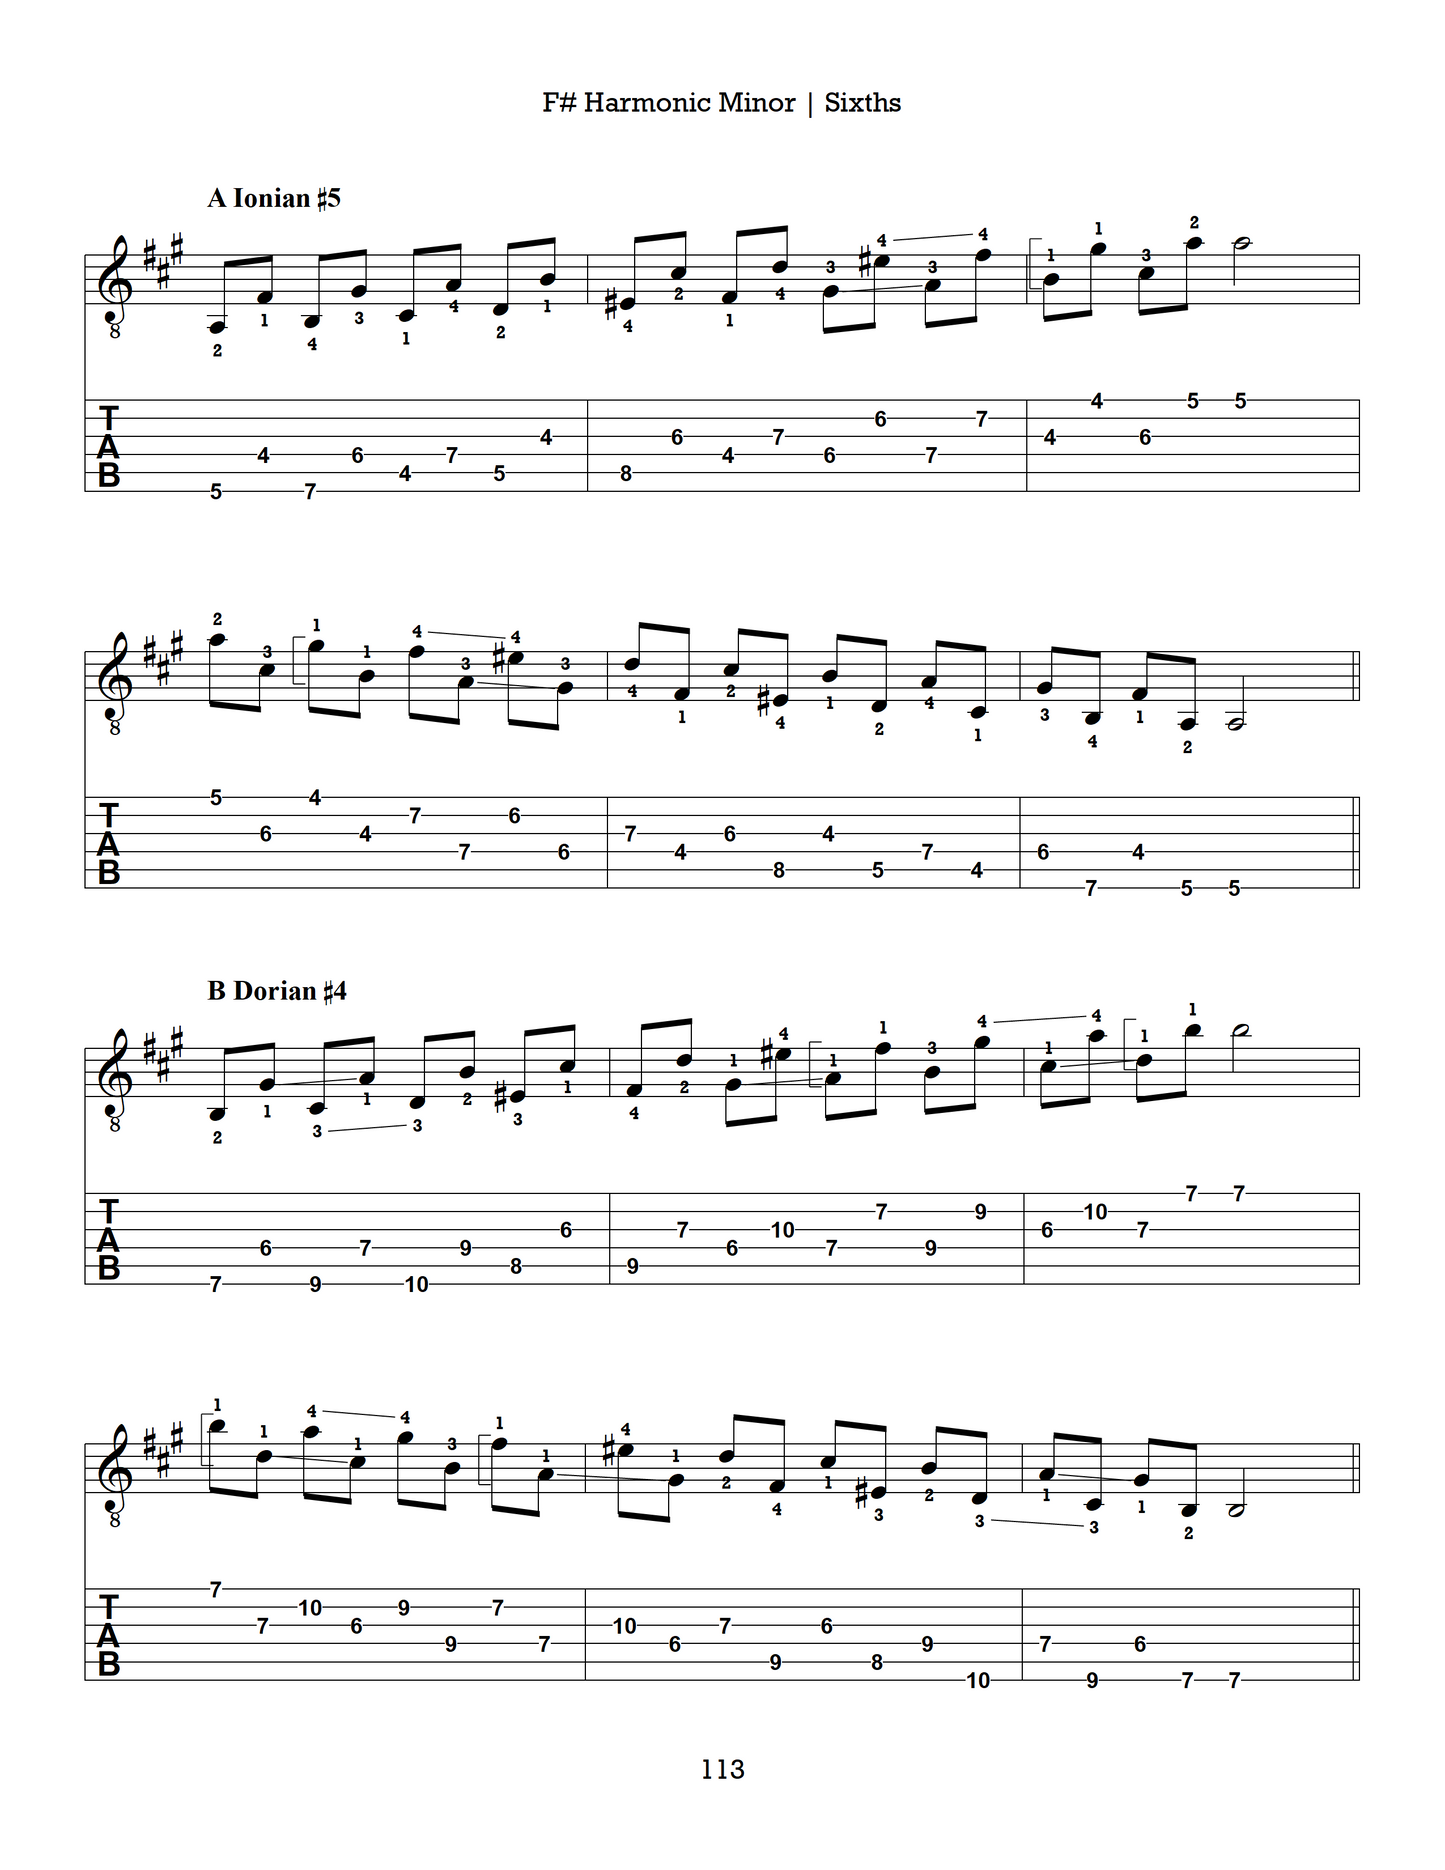 Hopscotch, Volume 2: Harmonic Minor Interval Studies